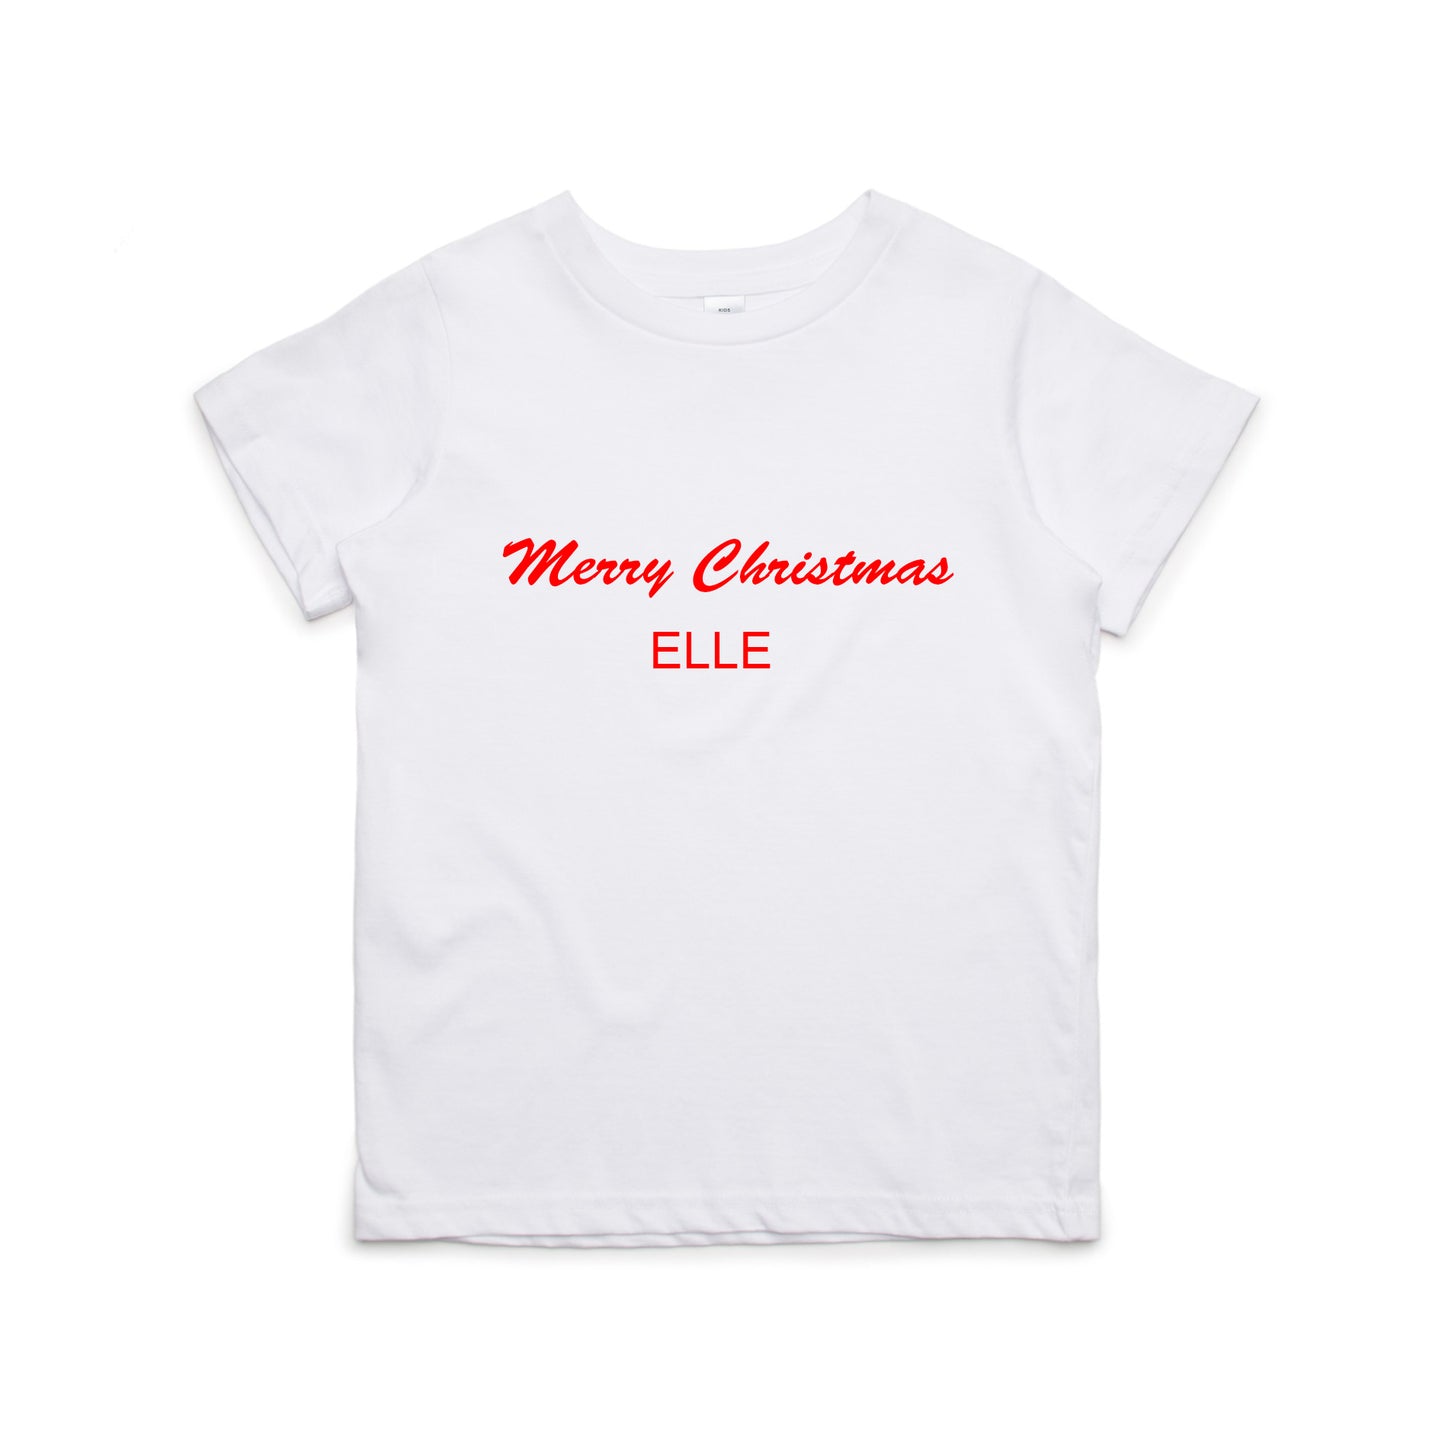 Merry Christmas Slogan - Kids Tee